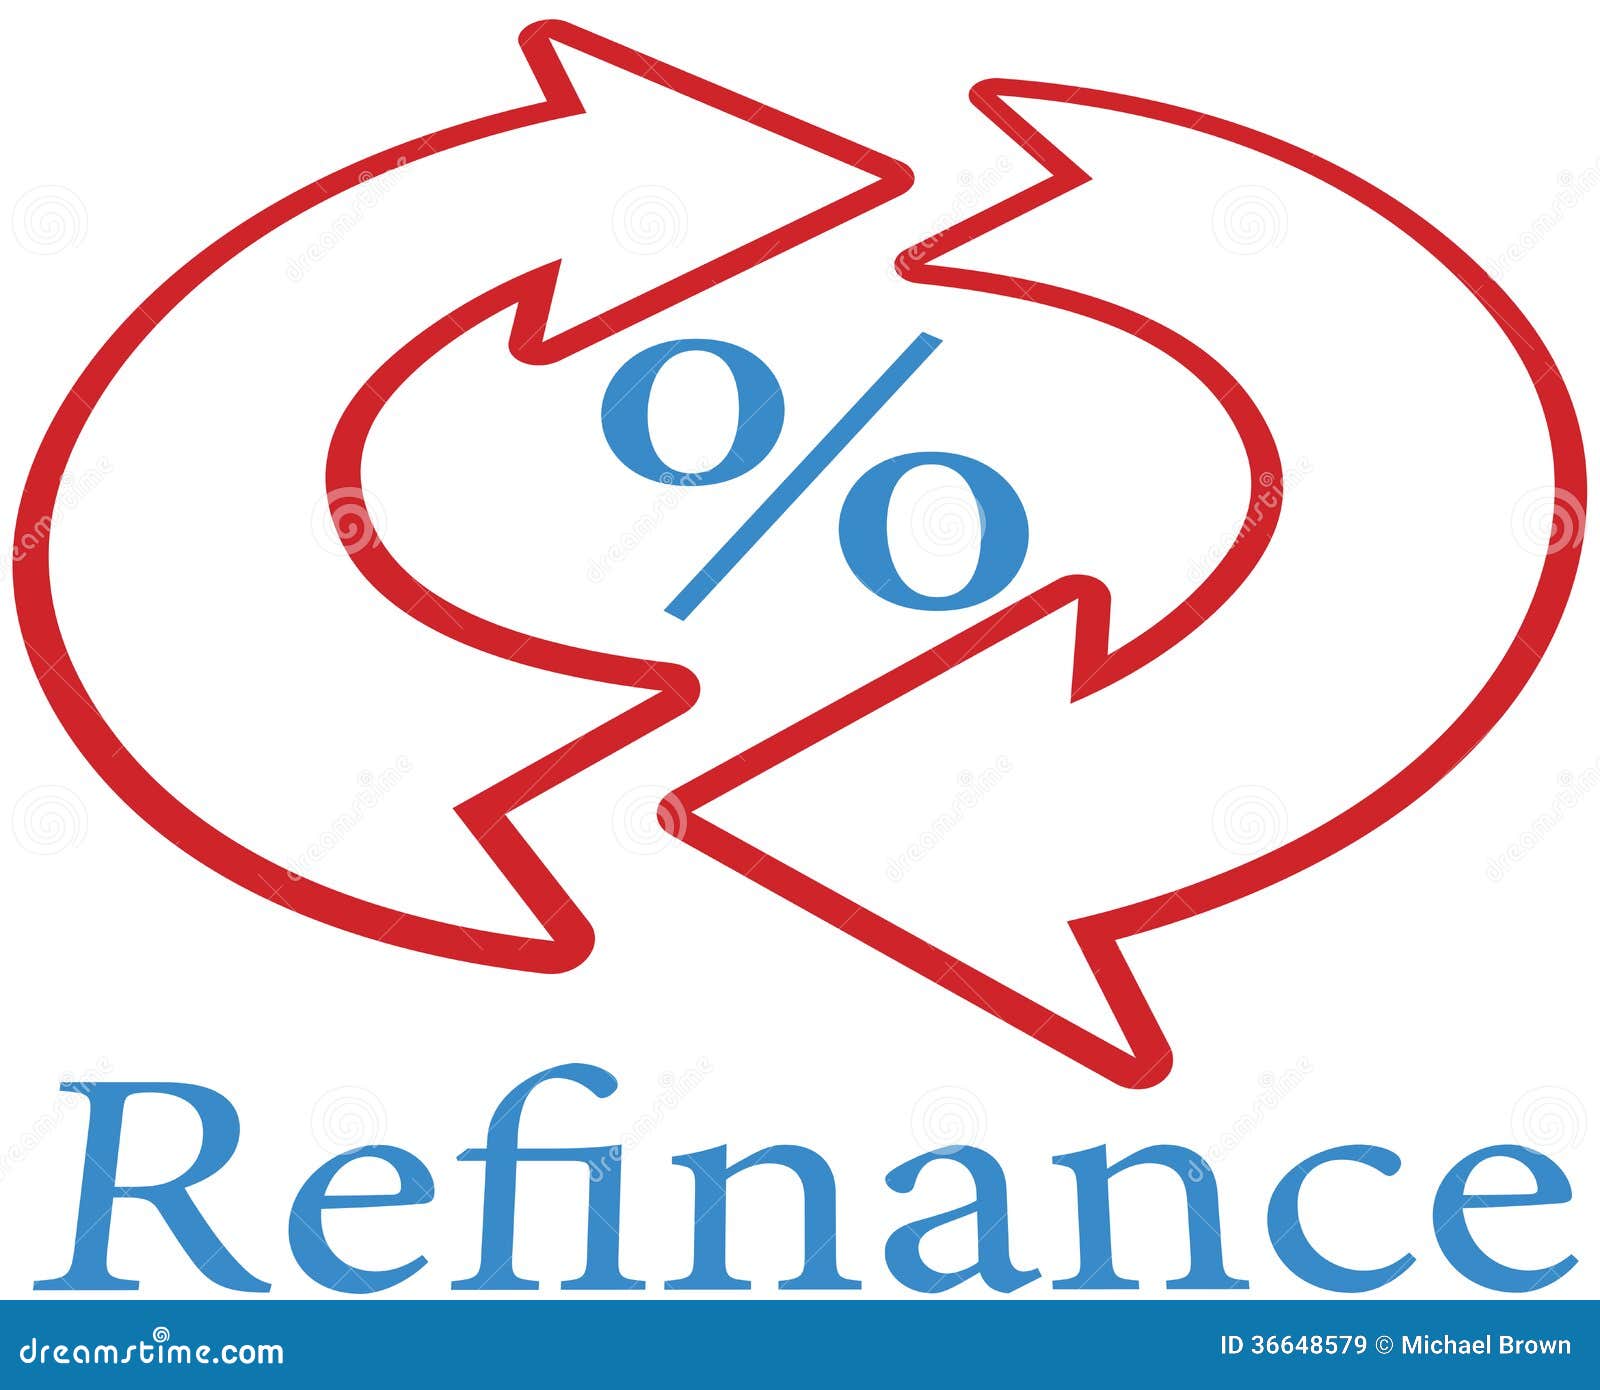 refinance home mortgage loan icon 